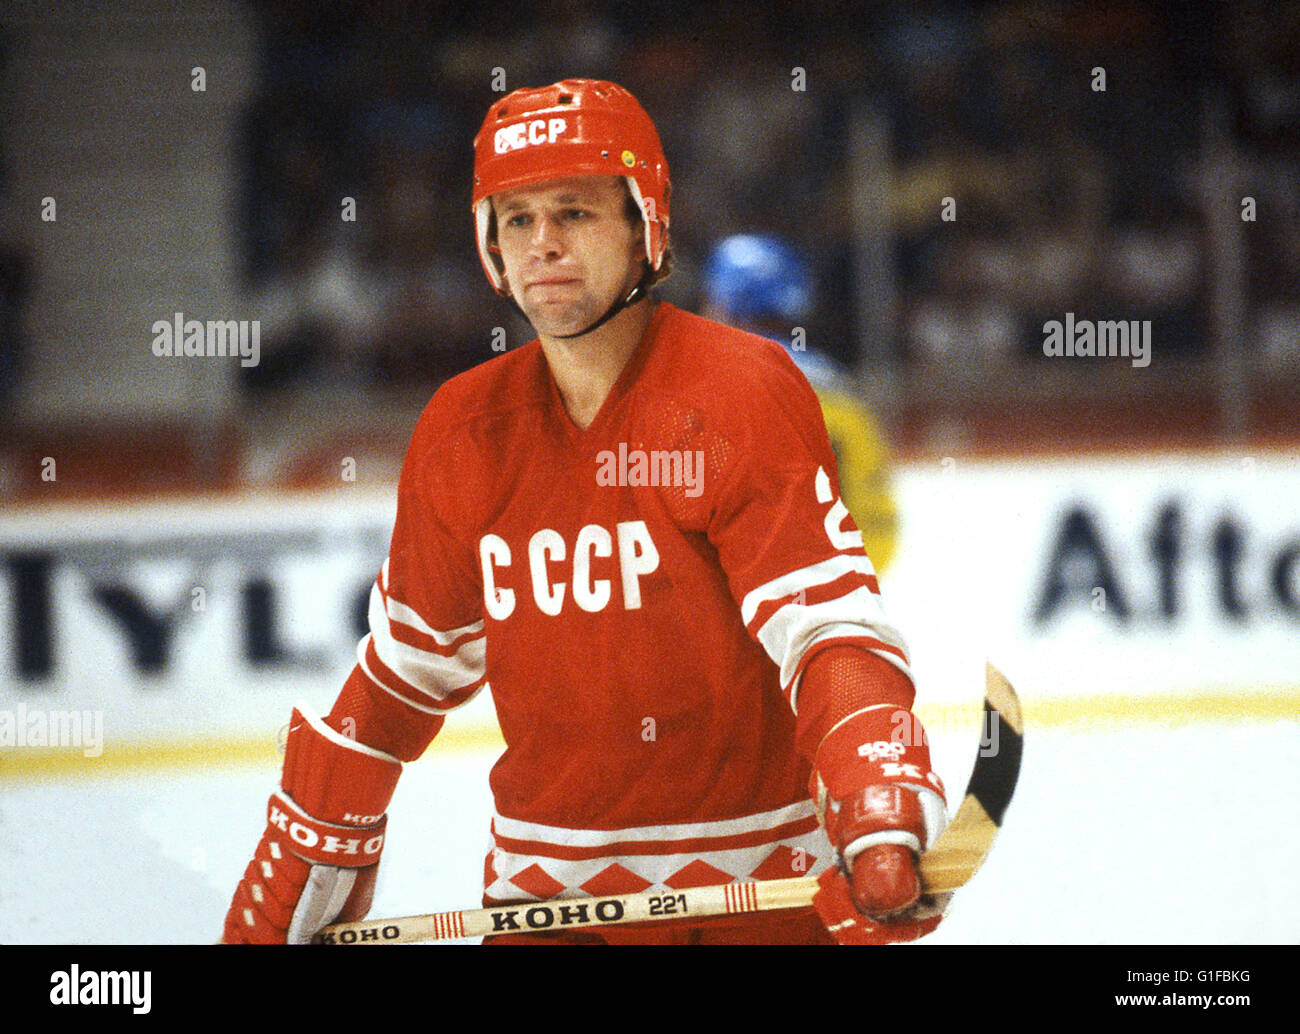 File:CCCP text logo in Soviet Union national ice hockey team